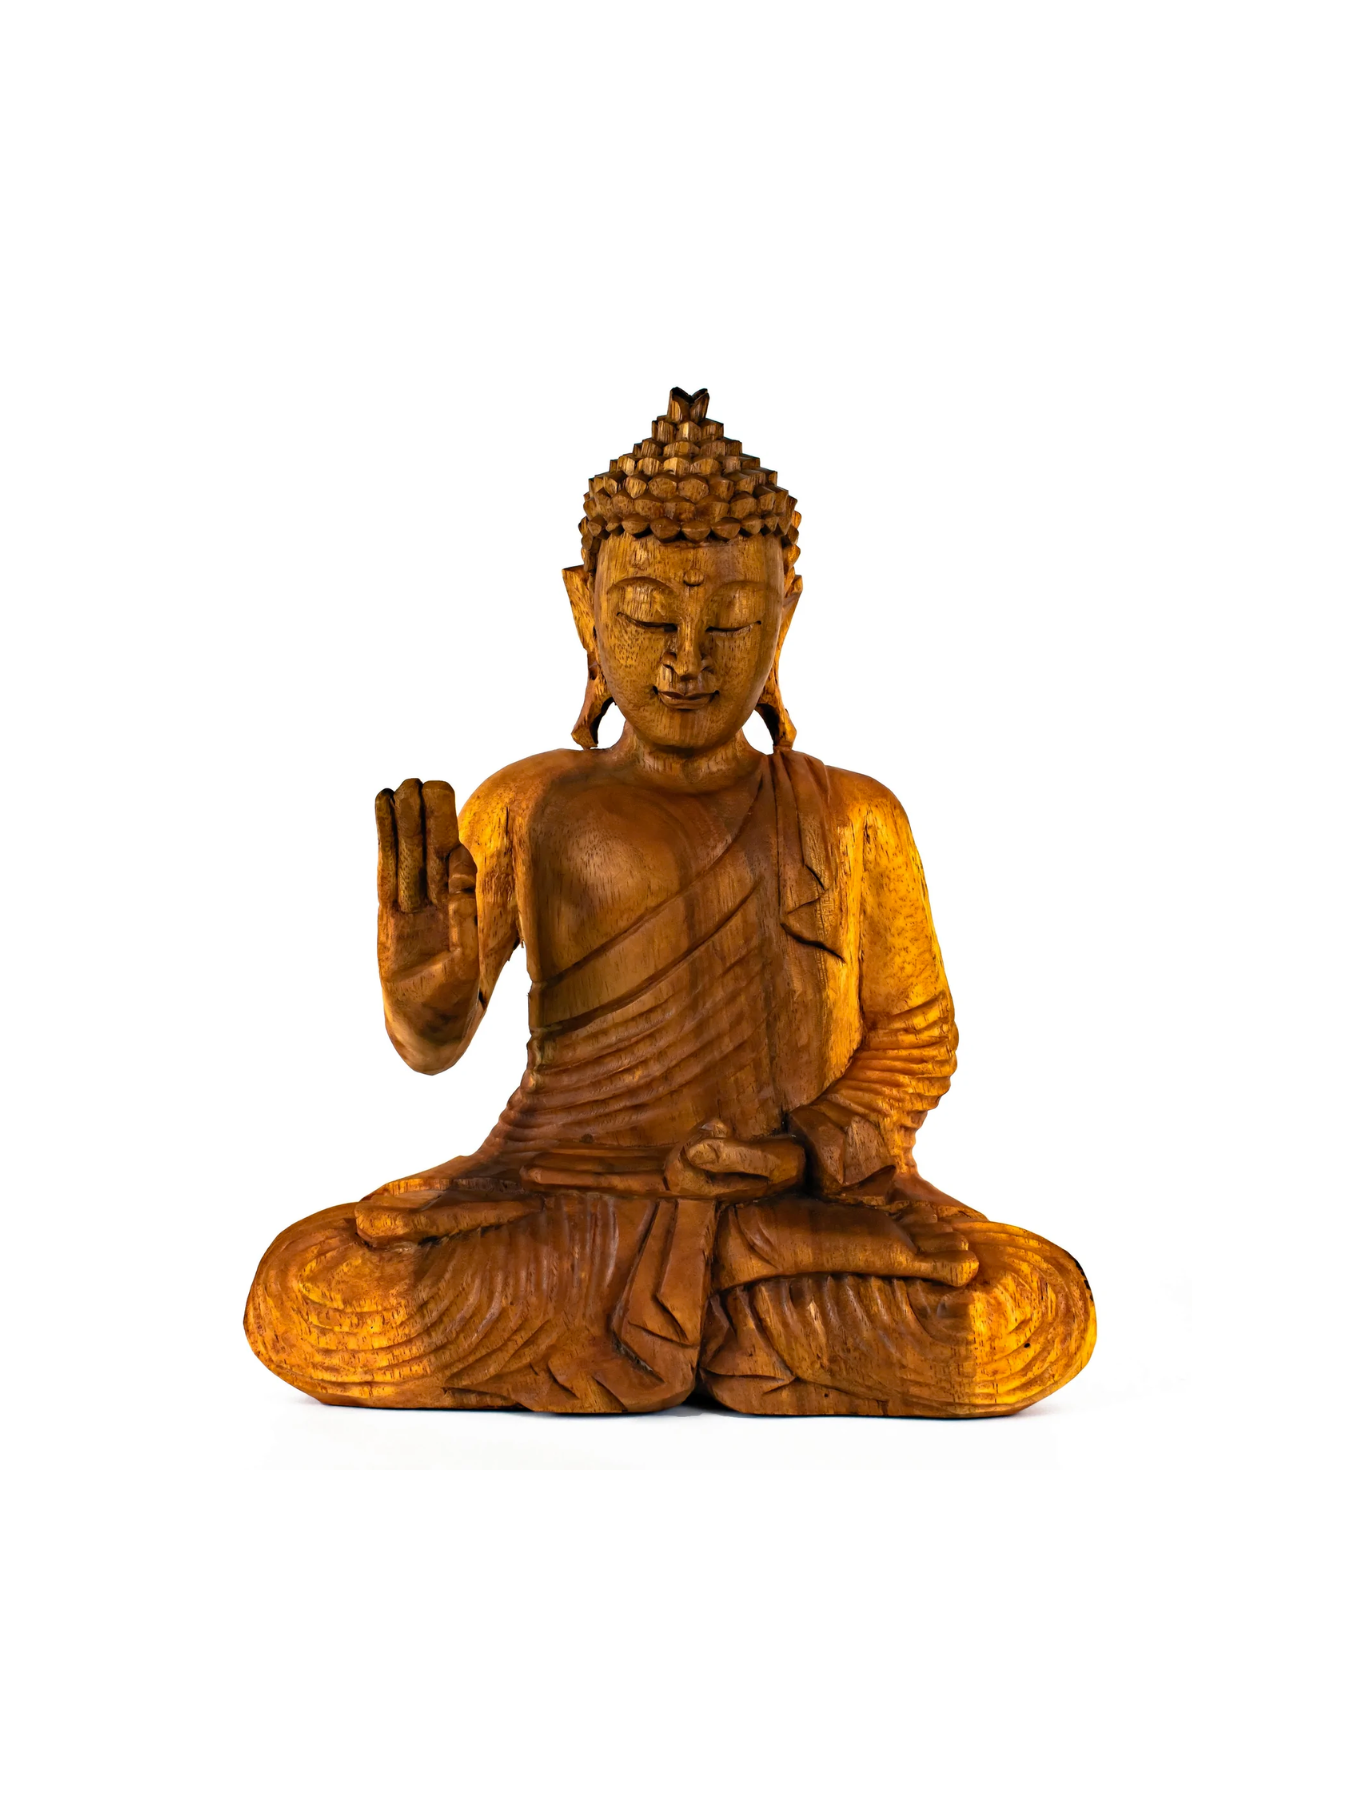 12" Wooden Sitting Buddha Statue Handmade Meditating Sculpture Figurine Home Decor Handcrafted Gift Art Wood Hand Carved Oriental Buddha Abhaya Mudra